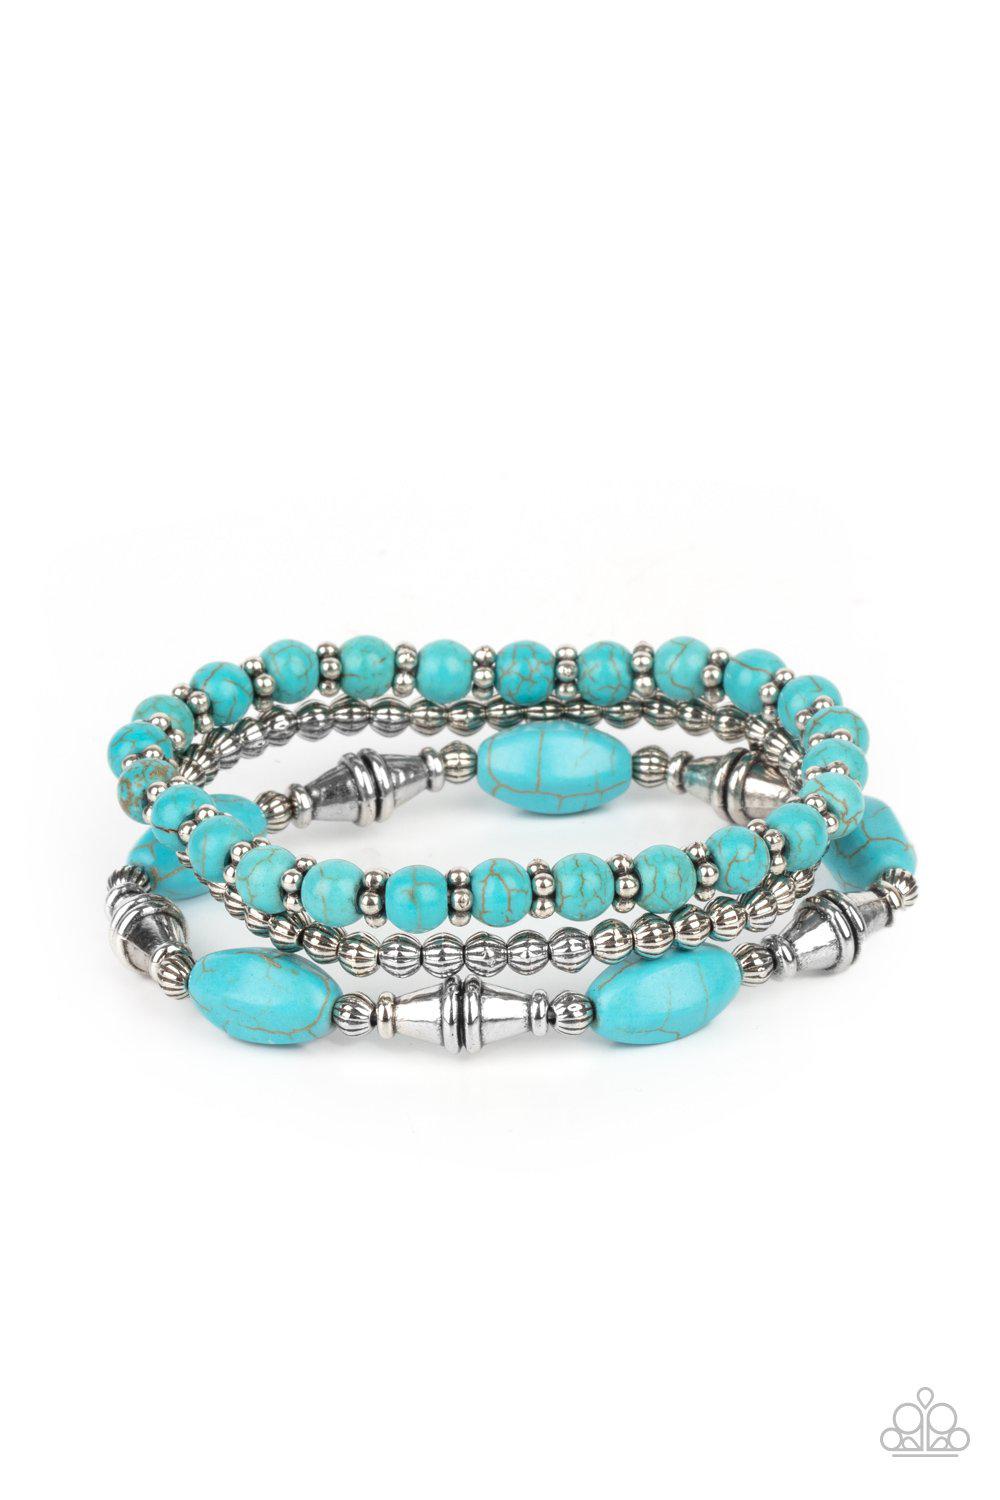 Sahara Sanctuary Turquoise Blue Stone Stretch Bracelet Set - Paparazzi Accessories- lightbox - CarasShop.com - $5 Jewelry by Cara Jewels